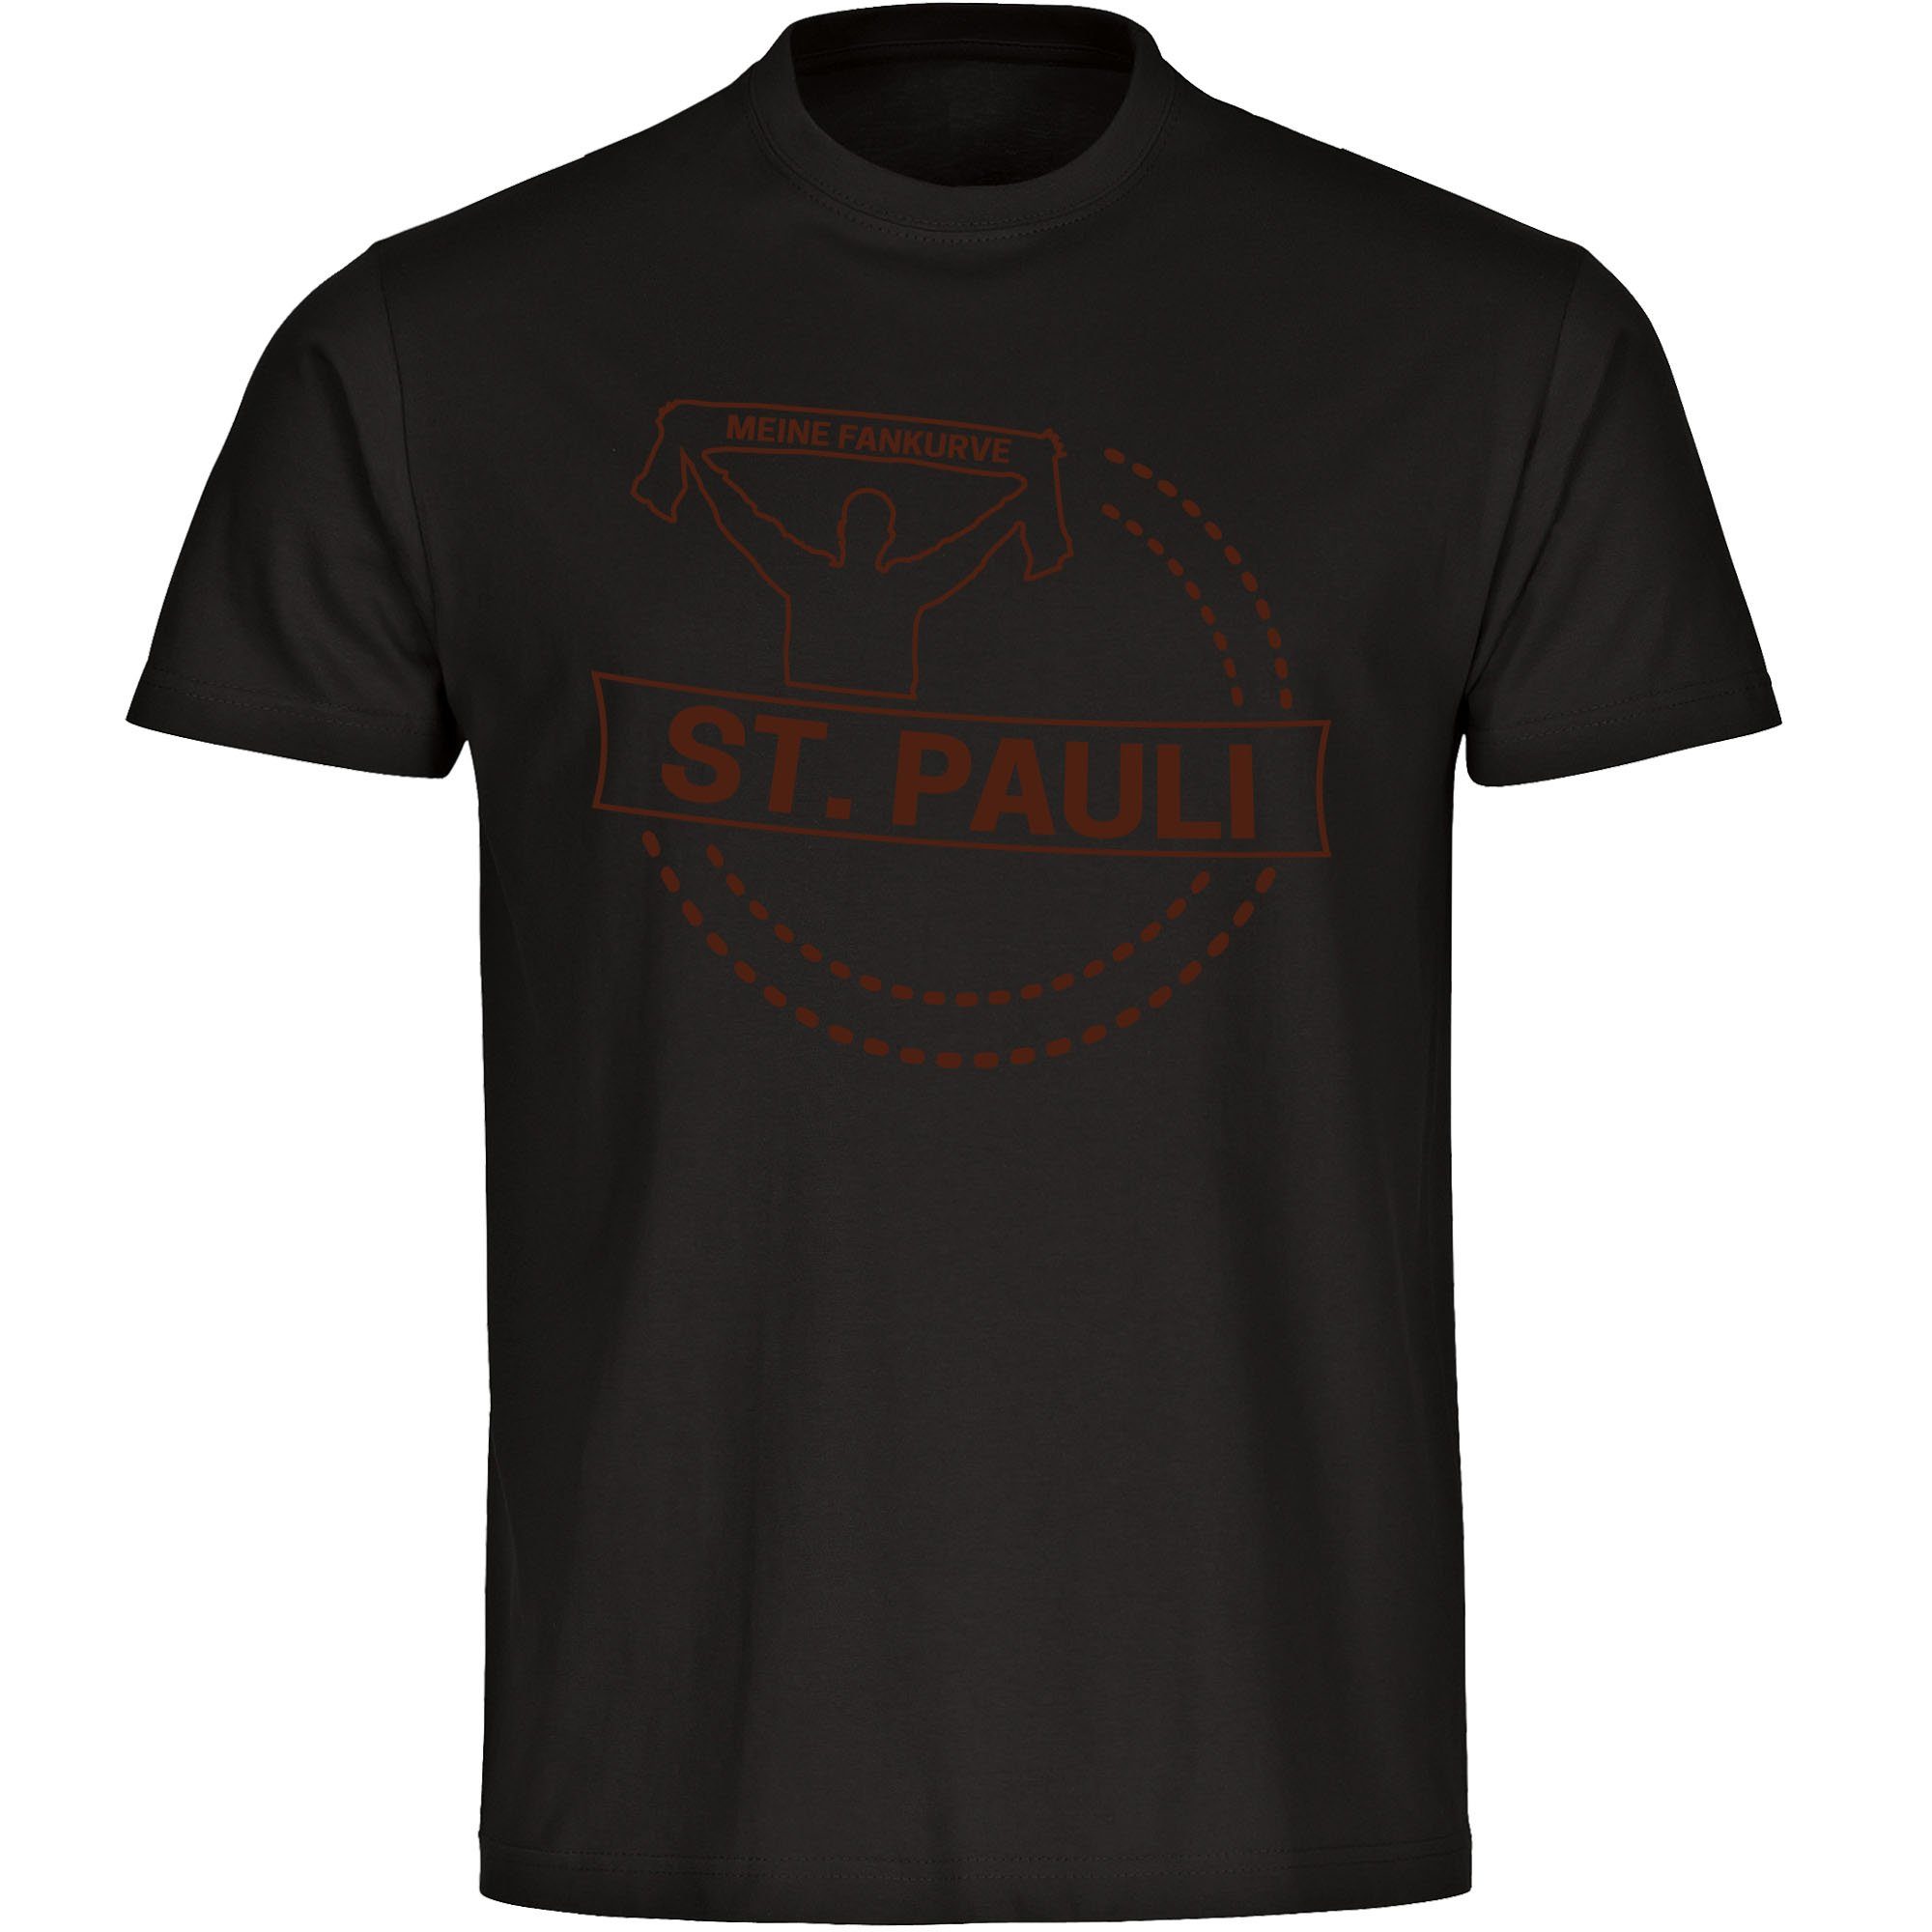 multifanshop T-Shirt Herren St. Pauli - Meine Fankurve - Männer